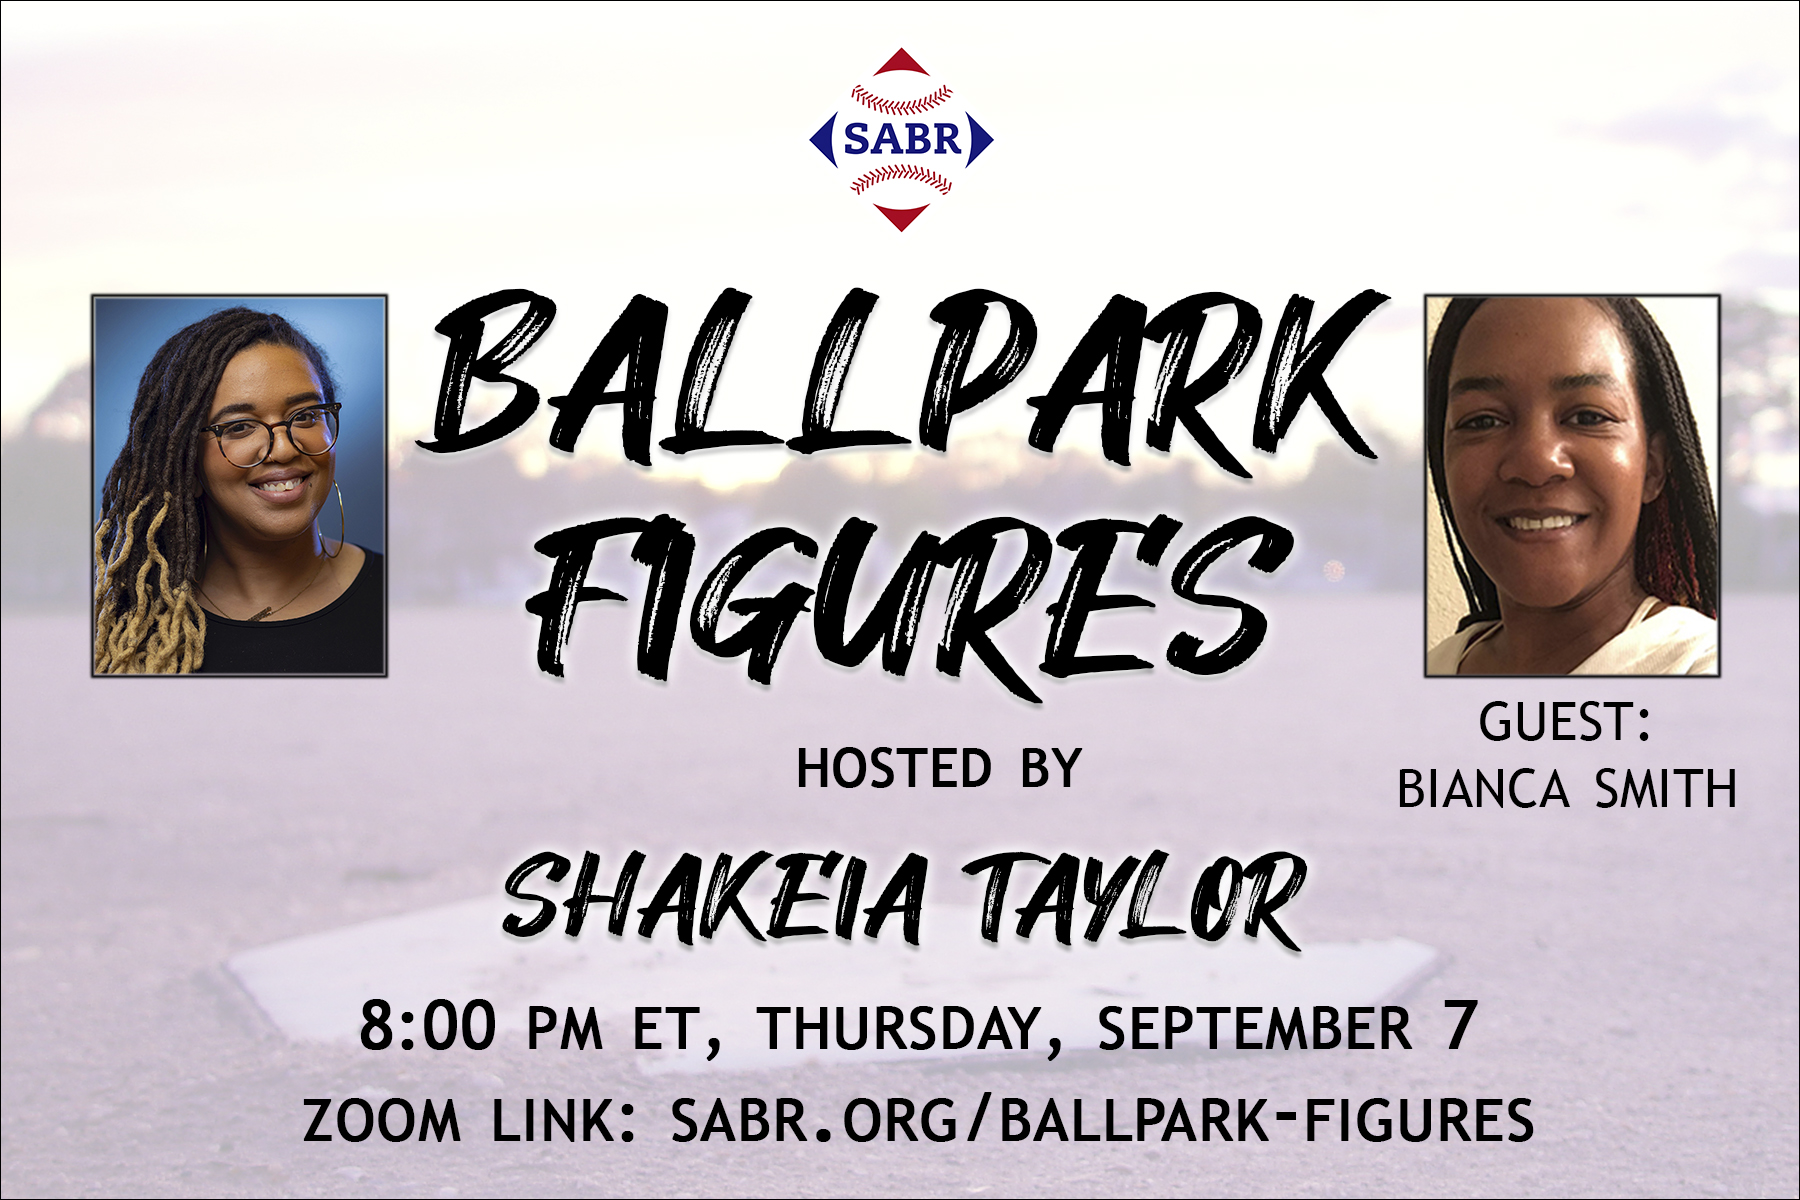 Ballpark Figures with Bianca Smith